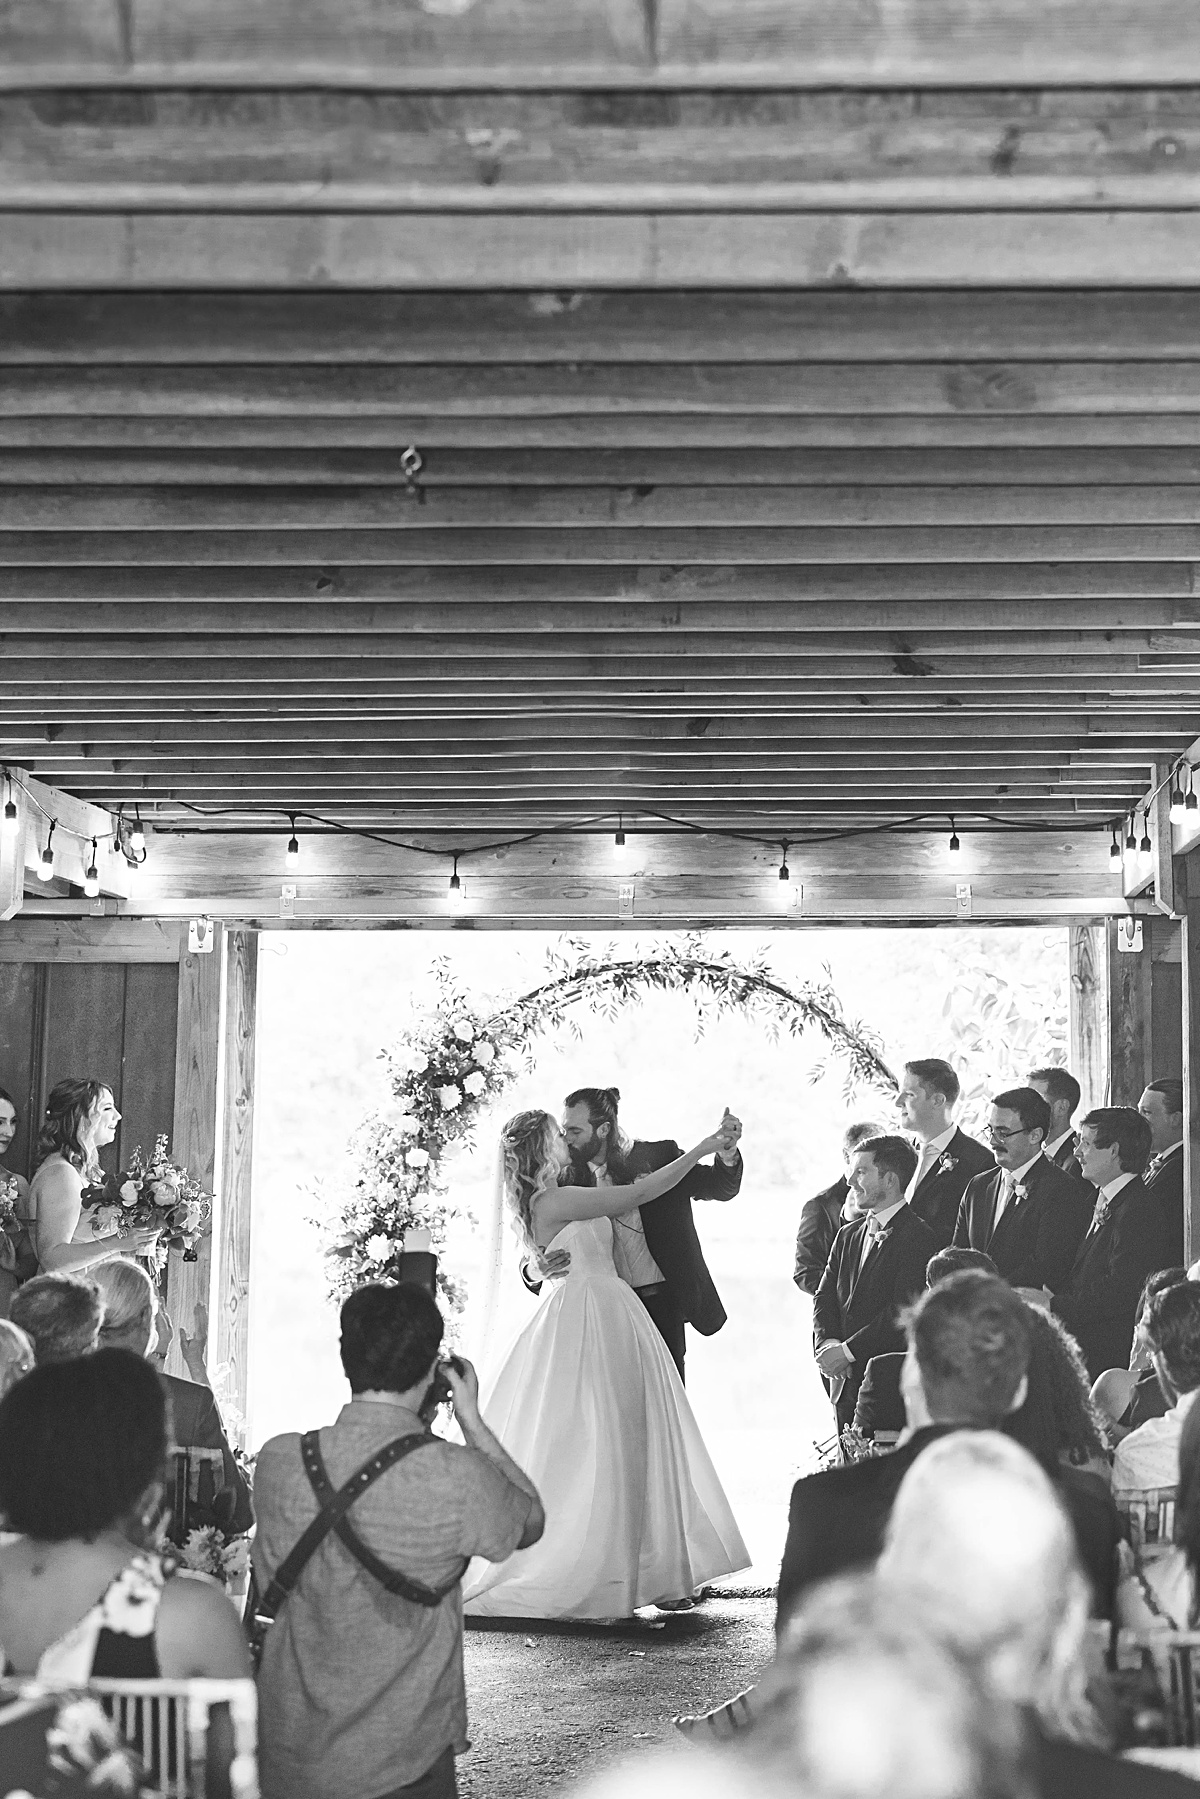 Ceremony photos at this Richmond, Virginia rustic spring garden wedding at Running Mare Farm.